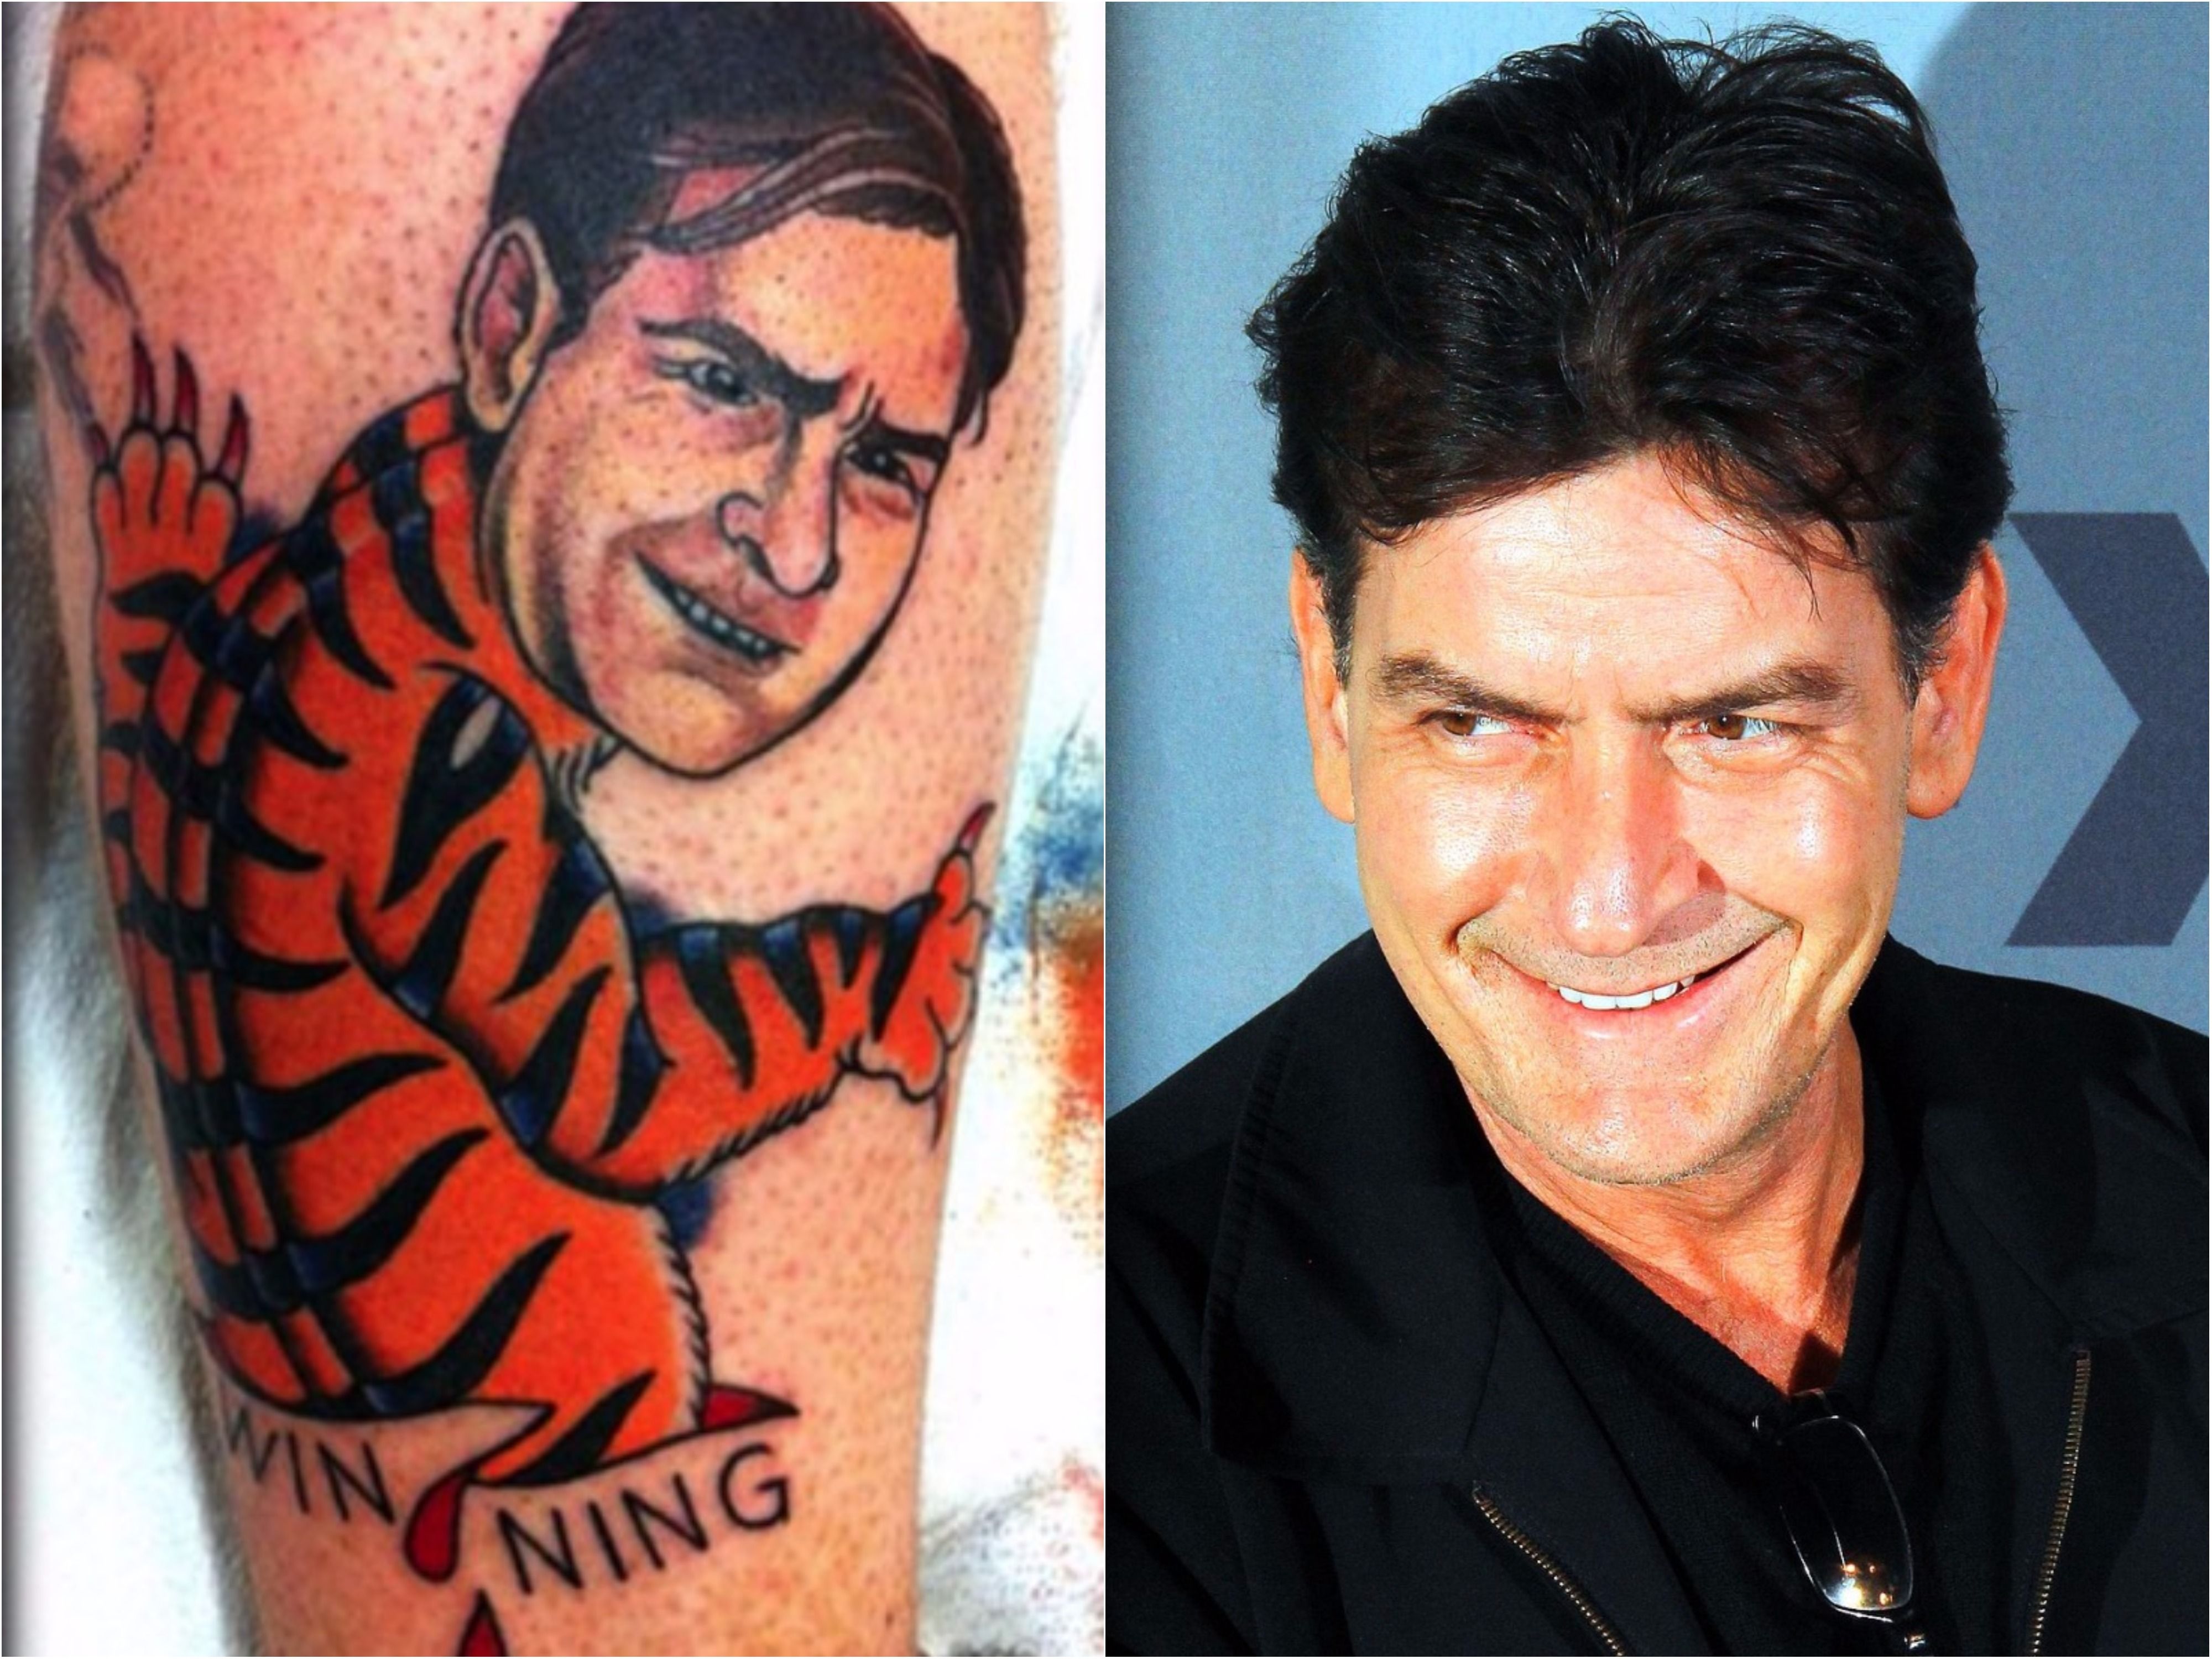 Bad Celebrity Tattoo - Charlie Sheen